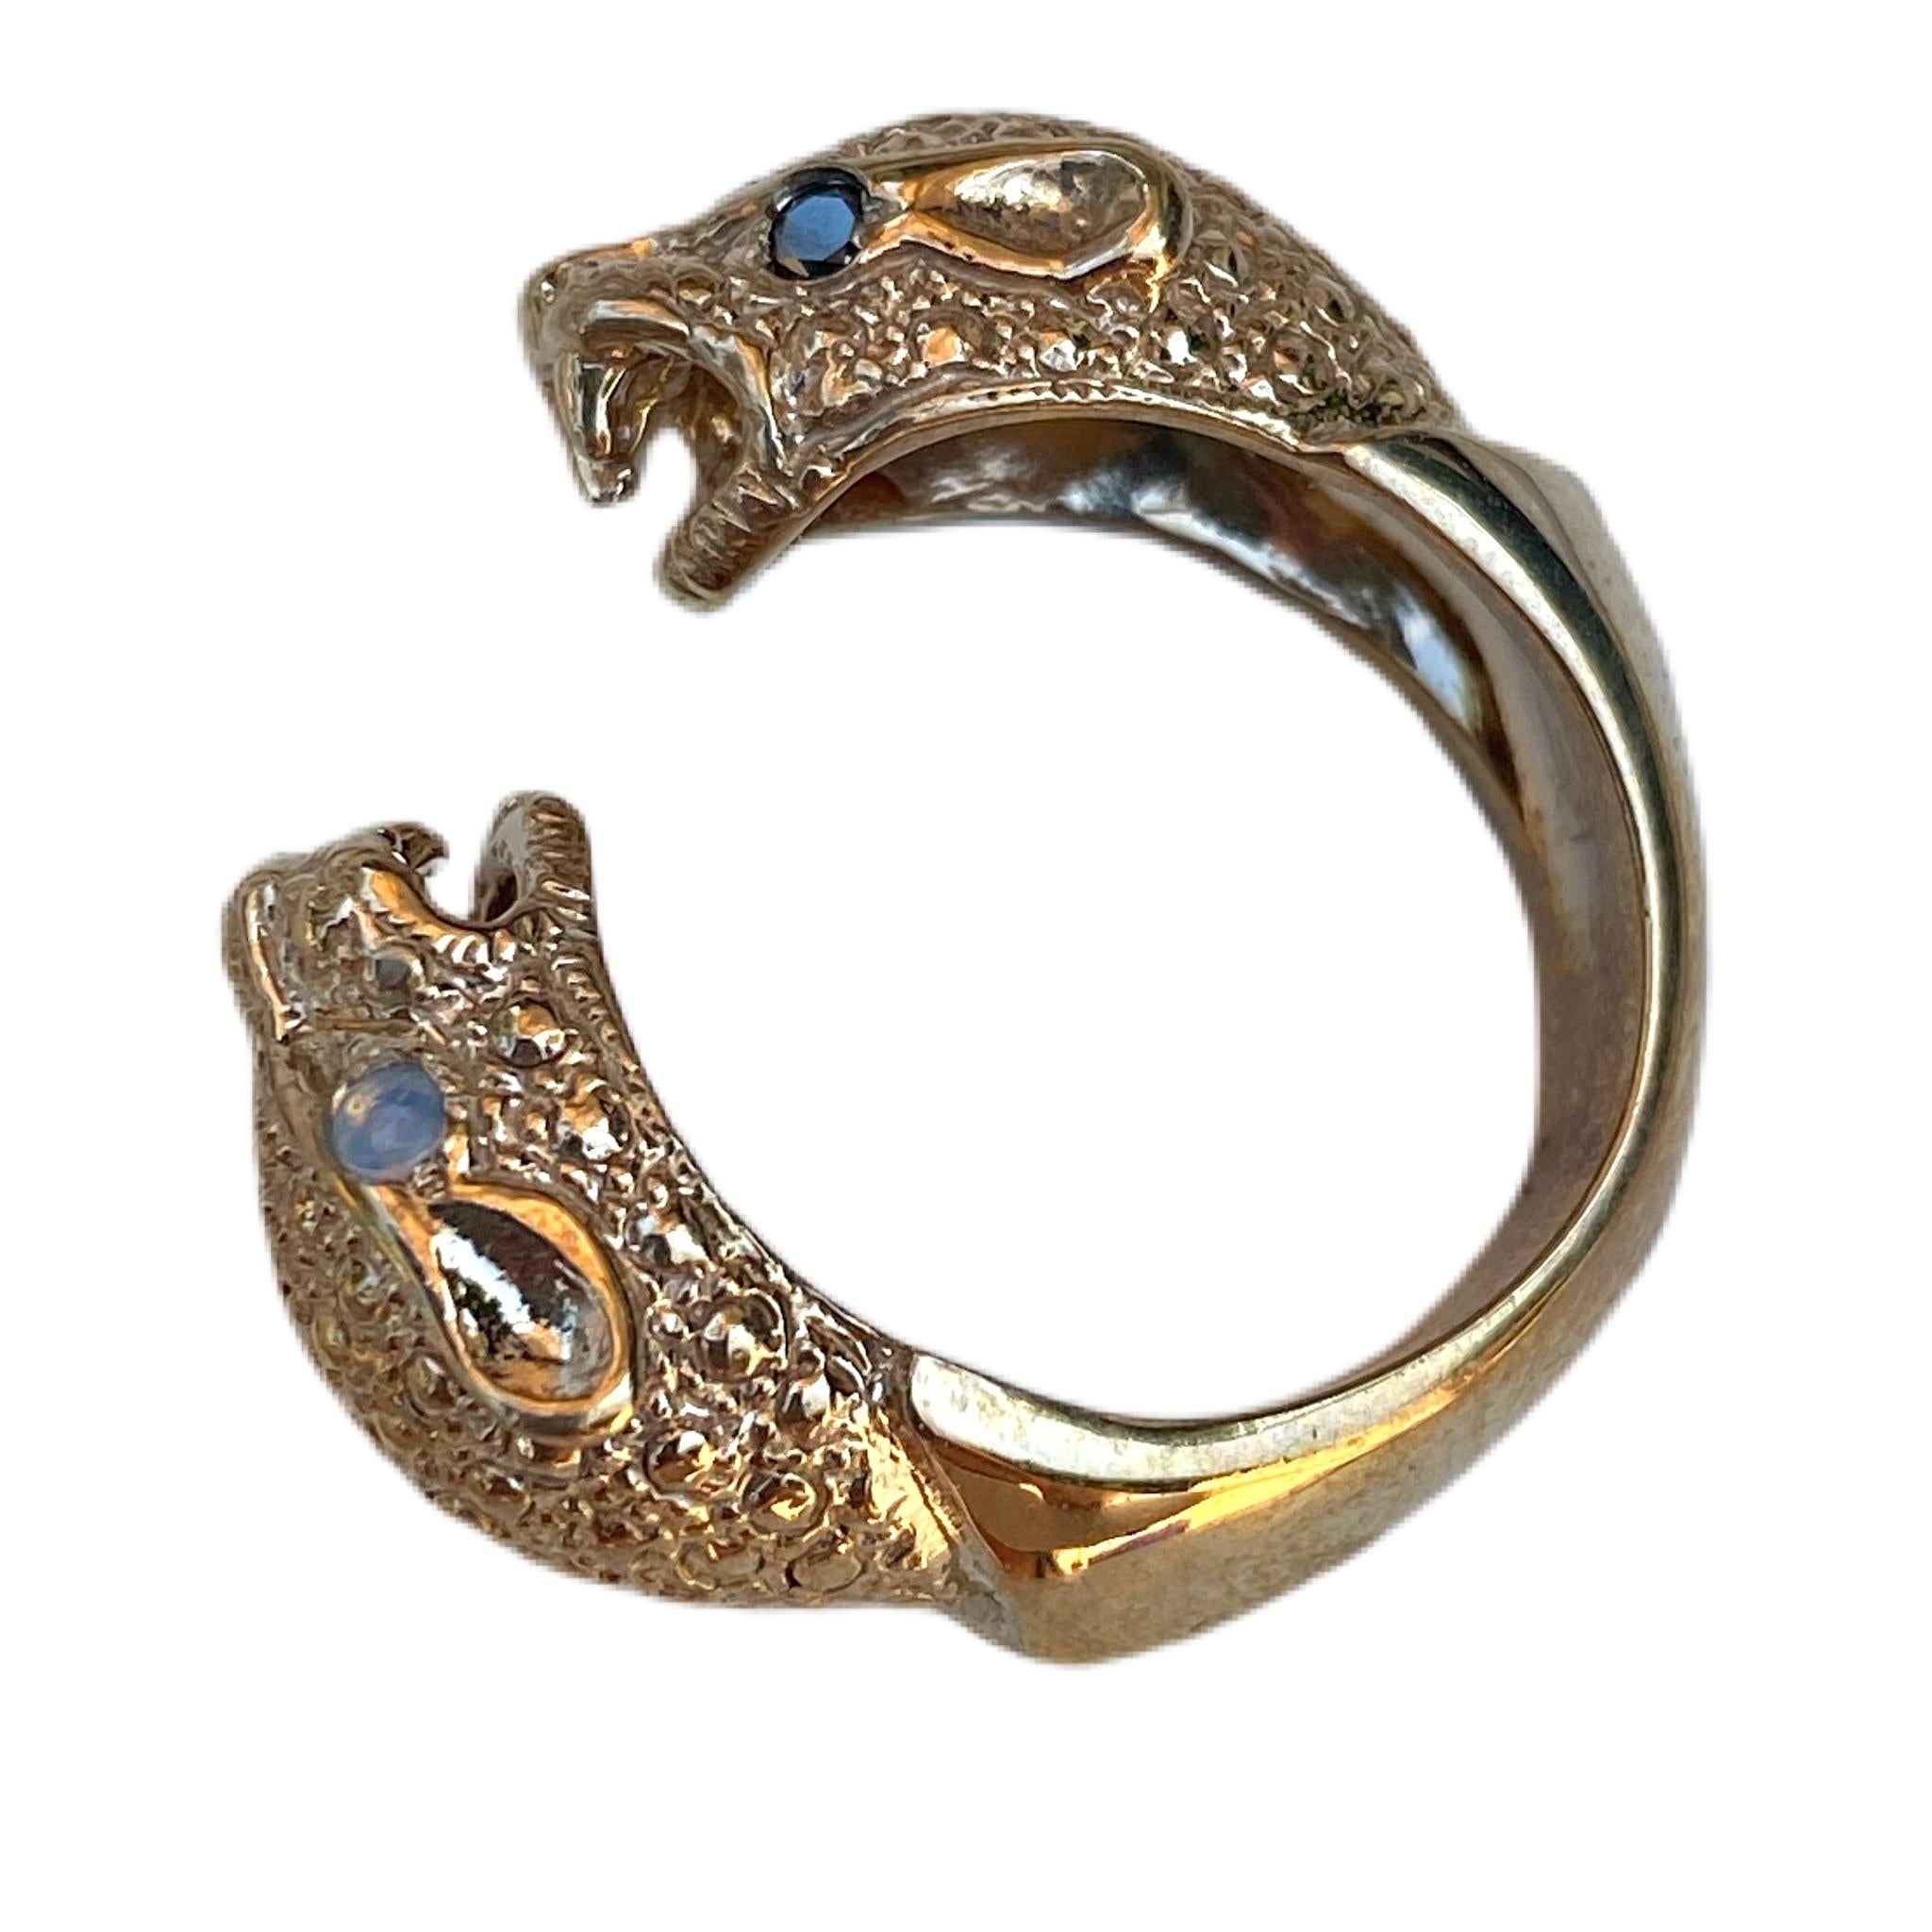 2 pcs Black Diamond 1 pc Tanazanite 1 pc Opal Jaguar Ring Bronze Animal Resizable J Dauphin
J DAUPHIN Ring 